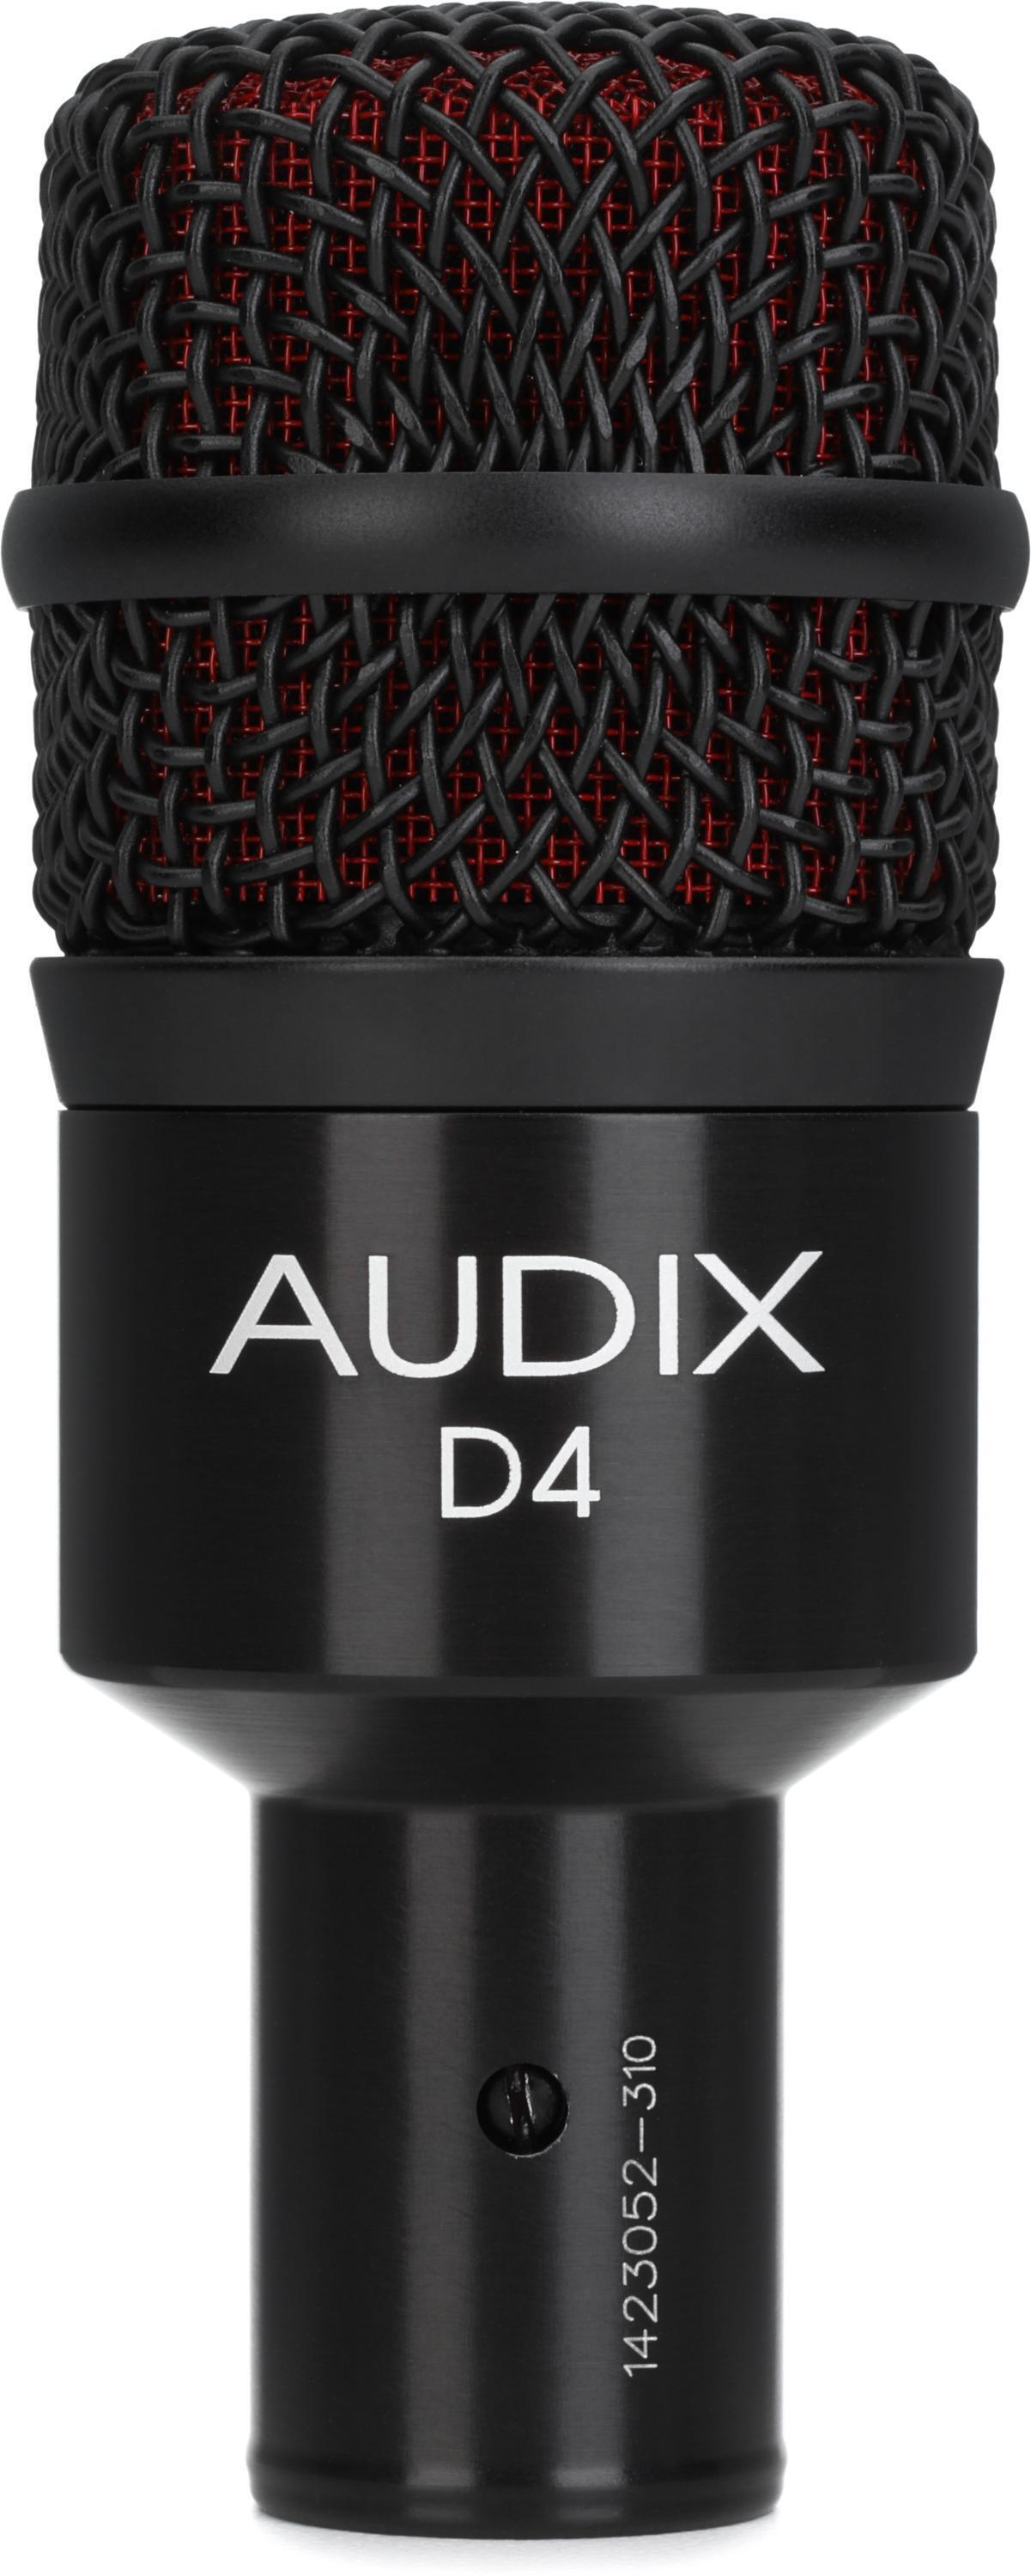 Bundled Item: Audix D4 Hypercardioid Dynamic Instrument Microphone